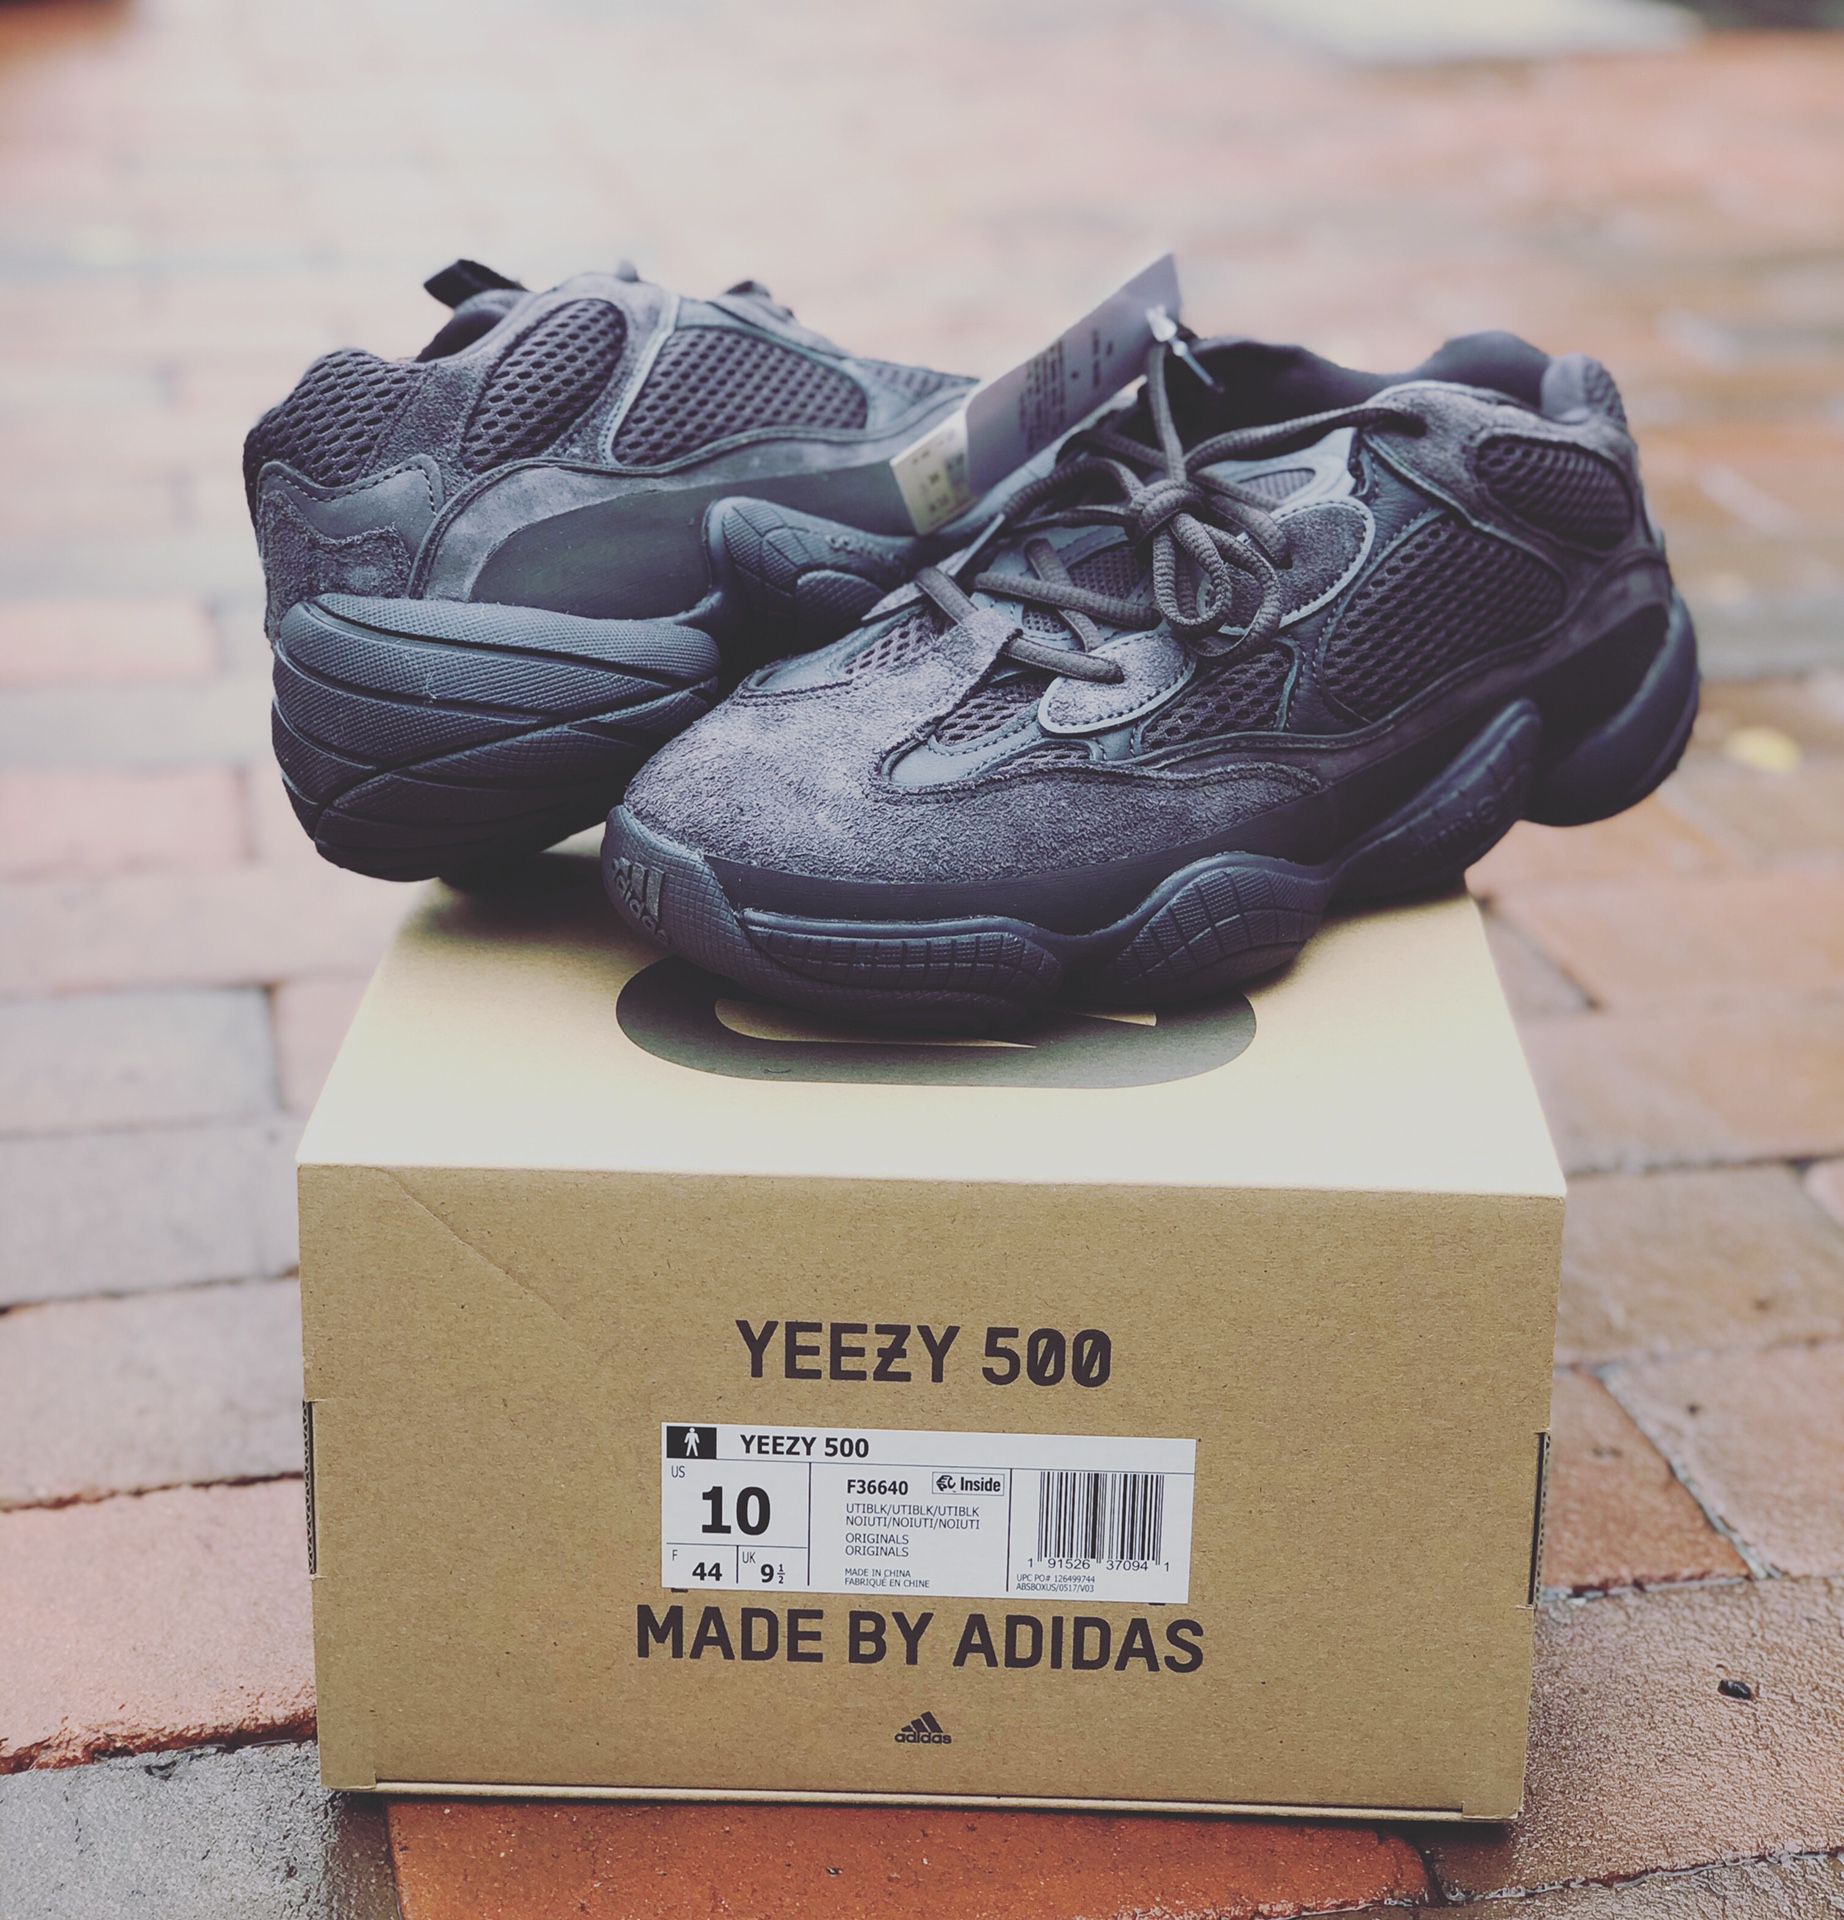 Adidas Yeezy 500 size 10 DS $300